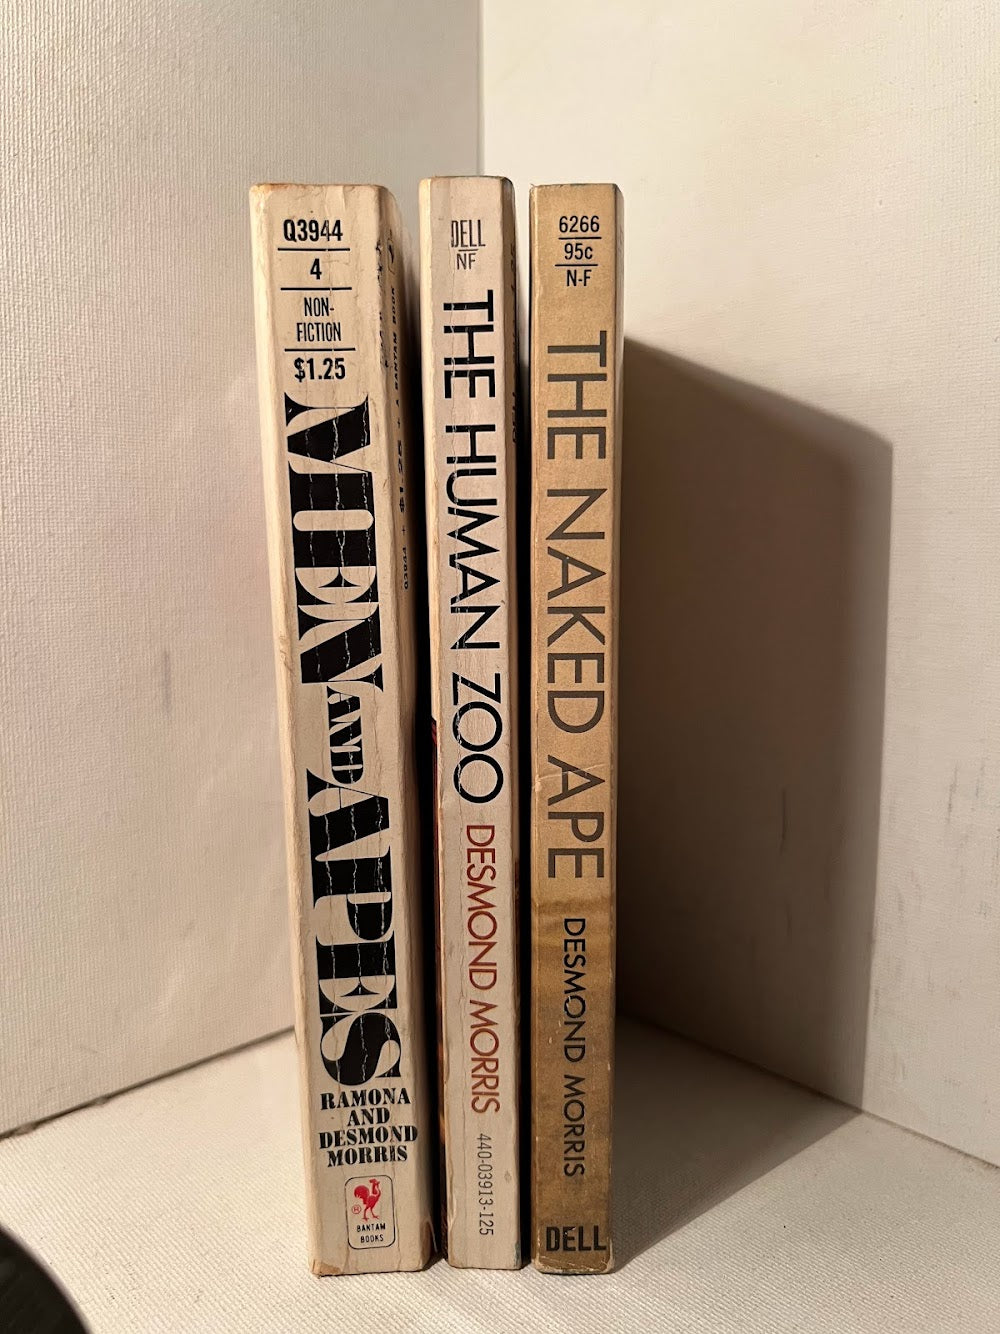 3 books by Desmond Morris